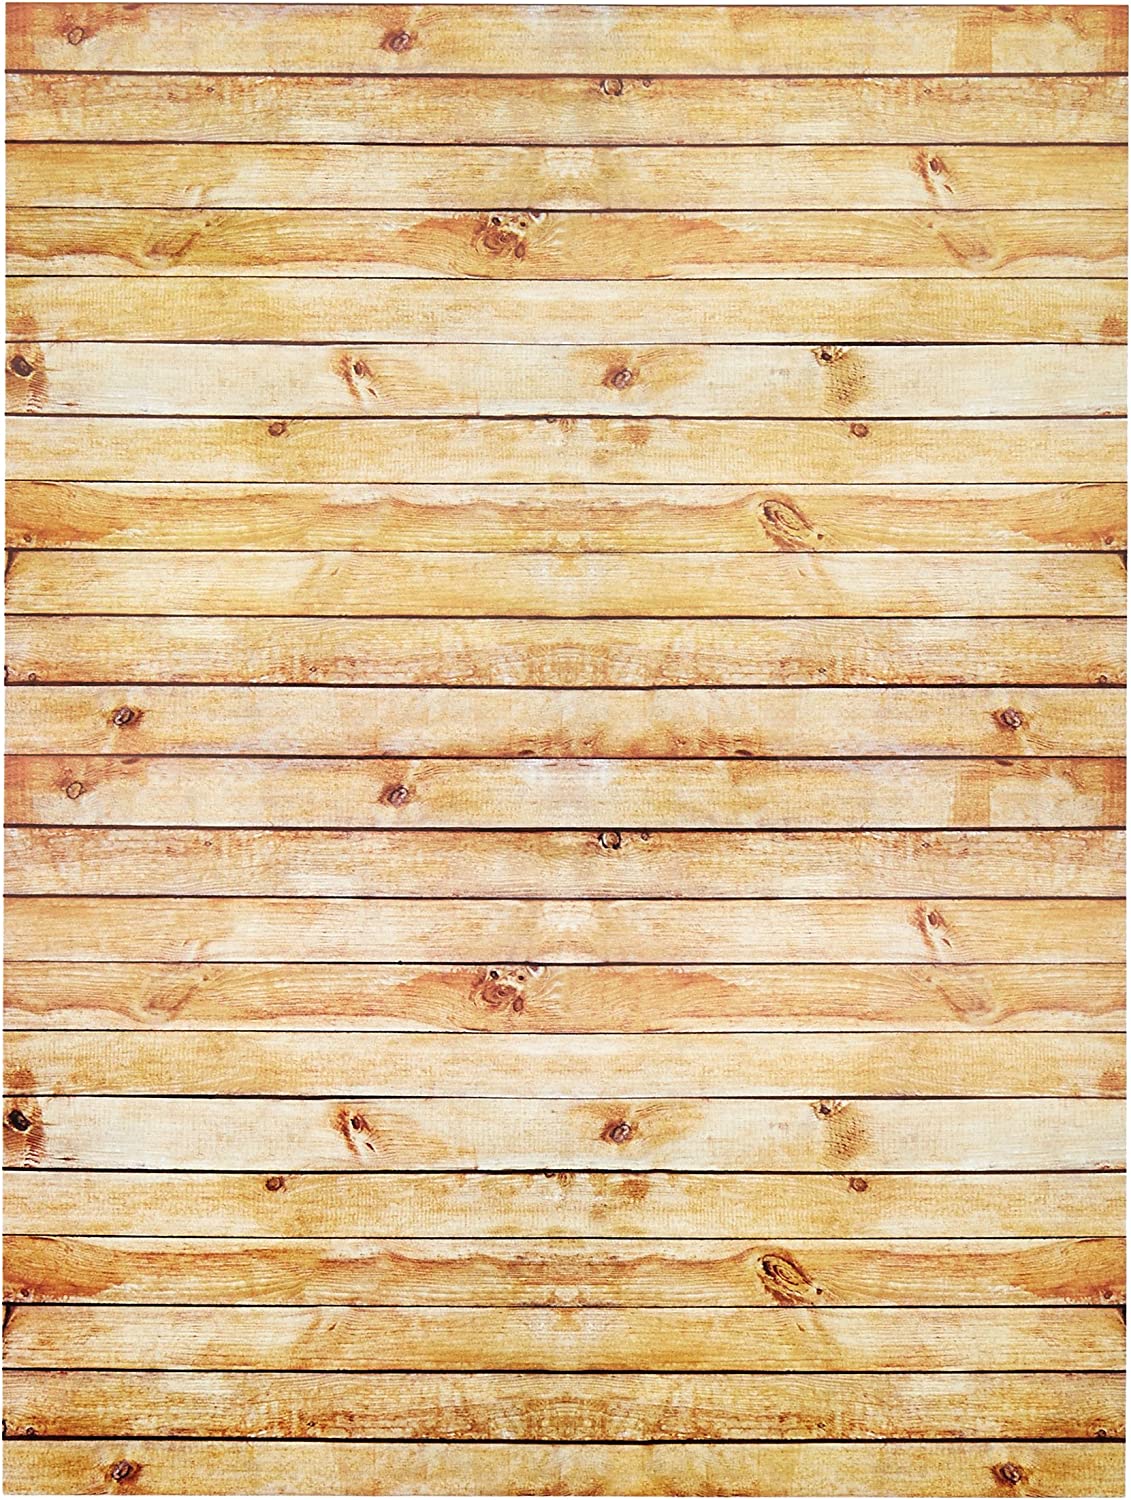 Backdrop Wood Paneling